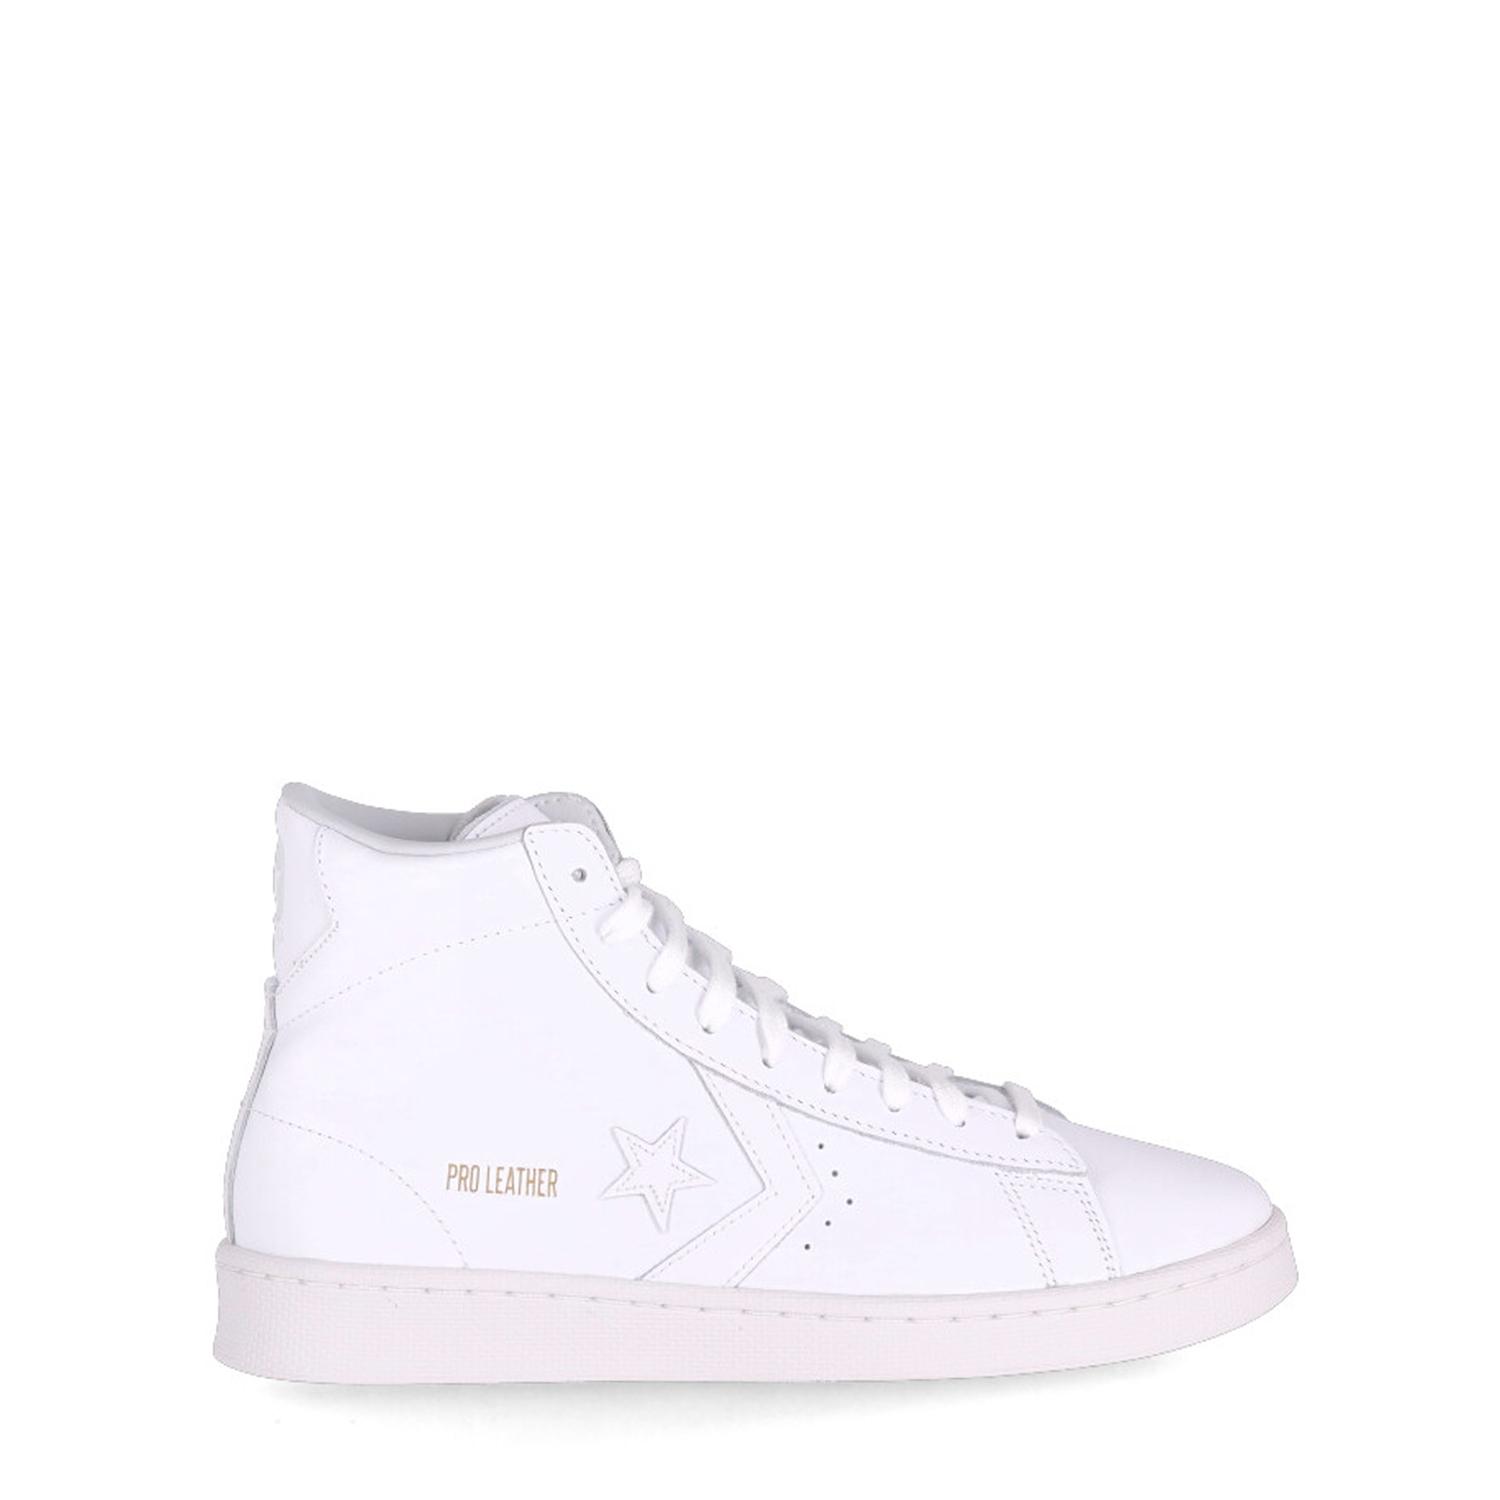 Converse Pro Leather Hi White white white